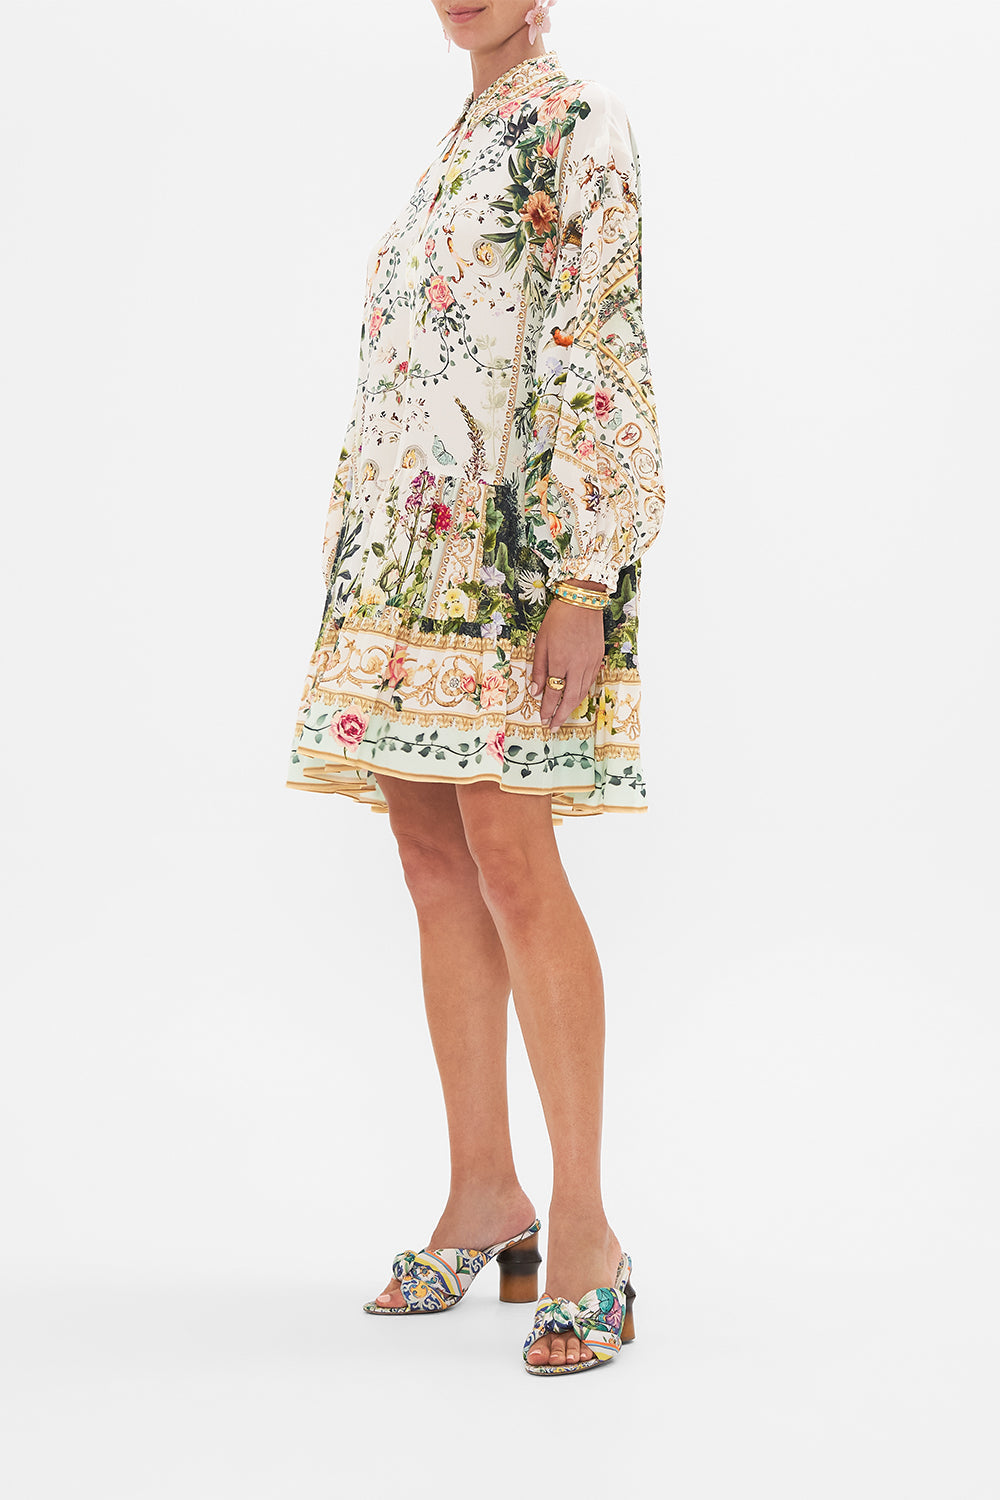 Side view of model wearing CAMILLA silk shirt dress in Renaissance Romance print